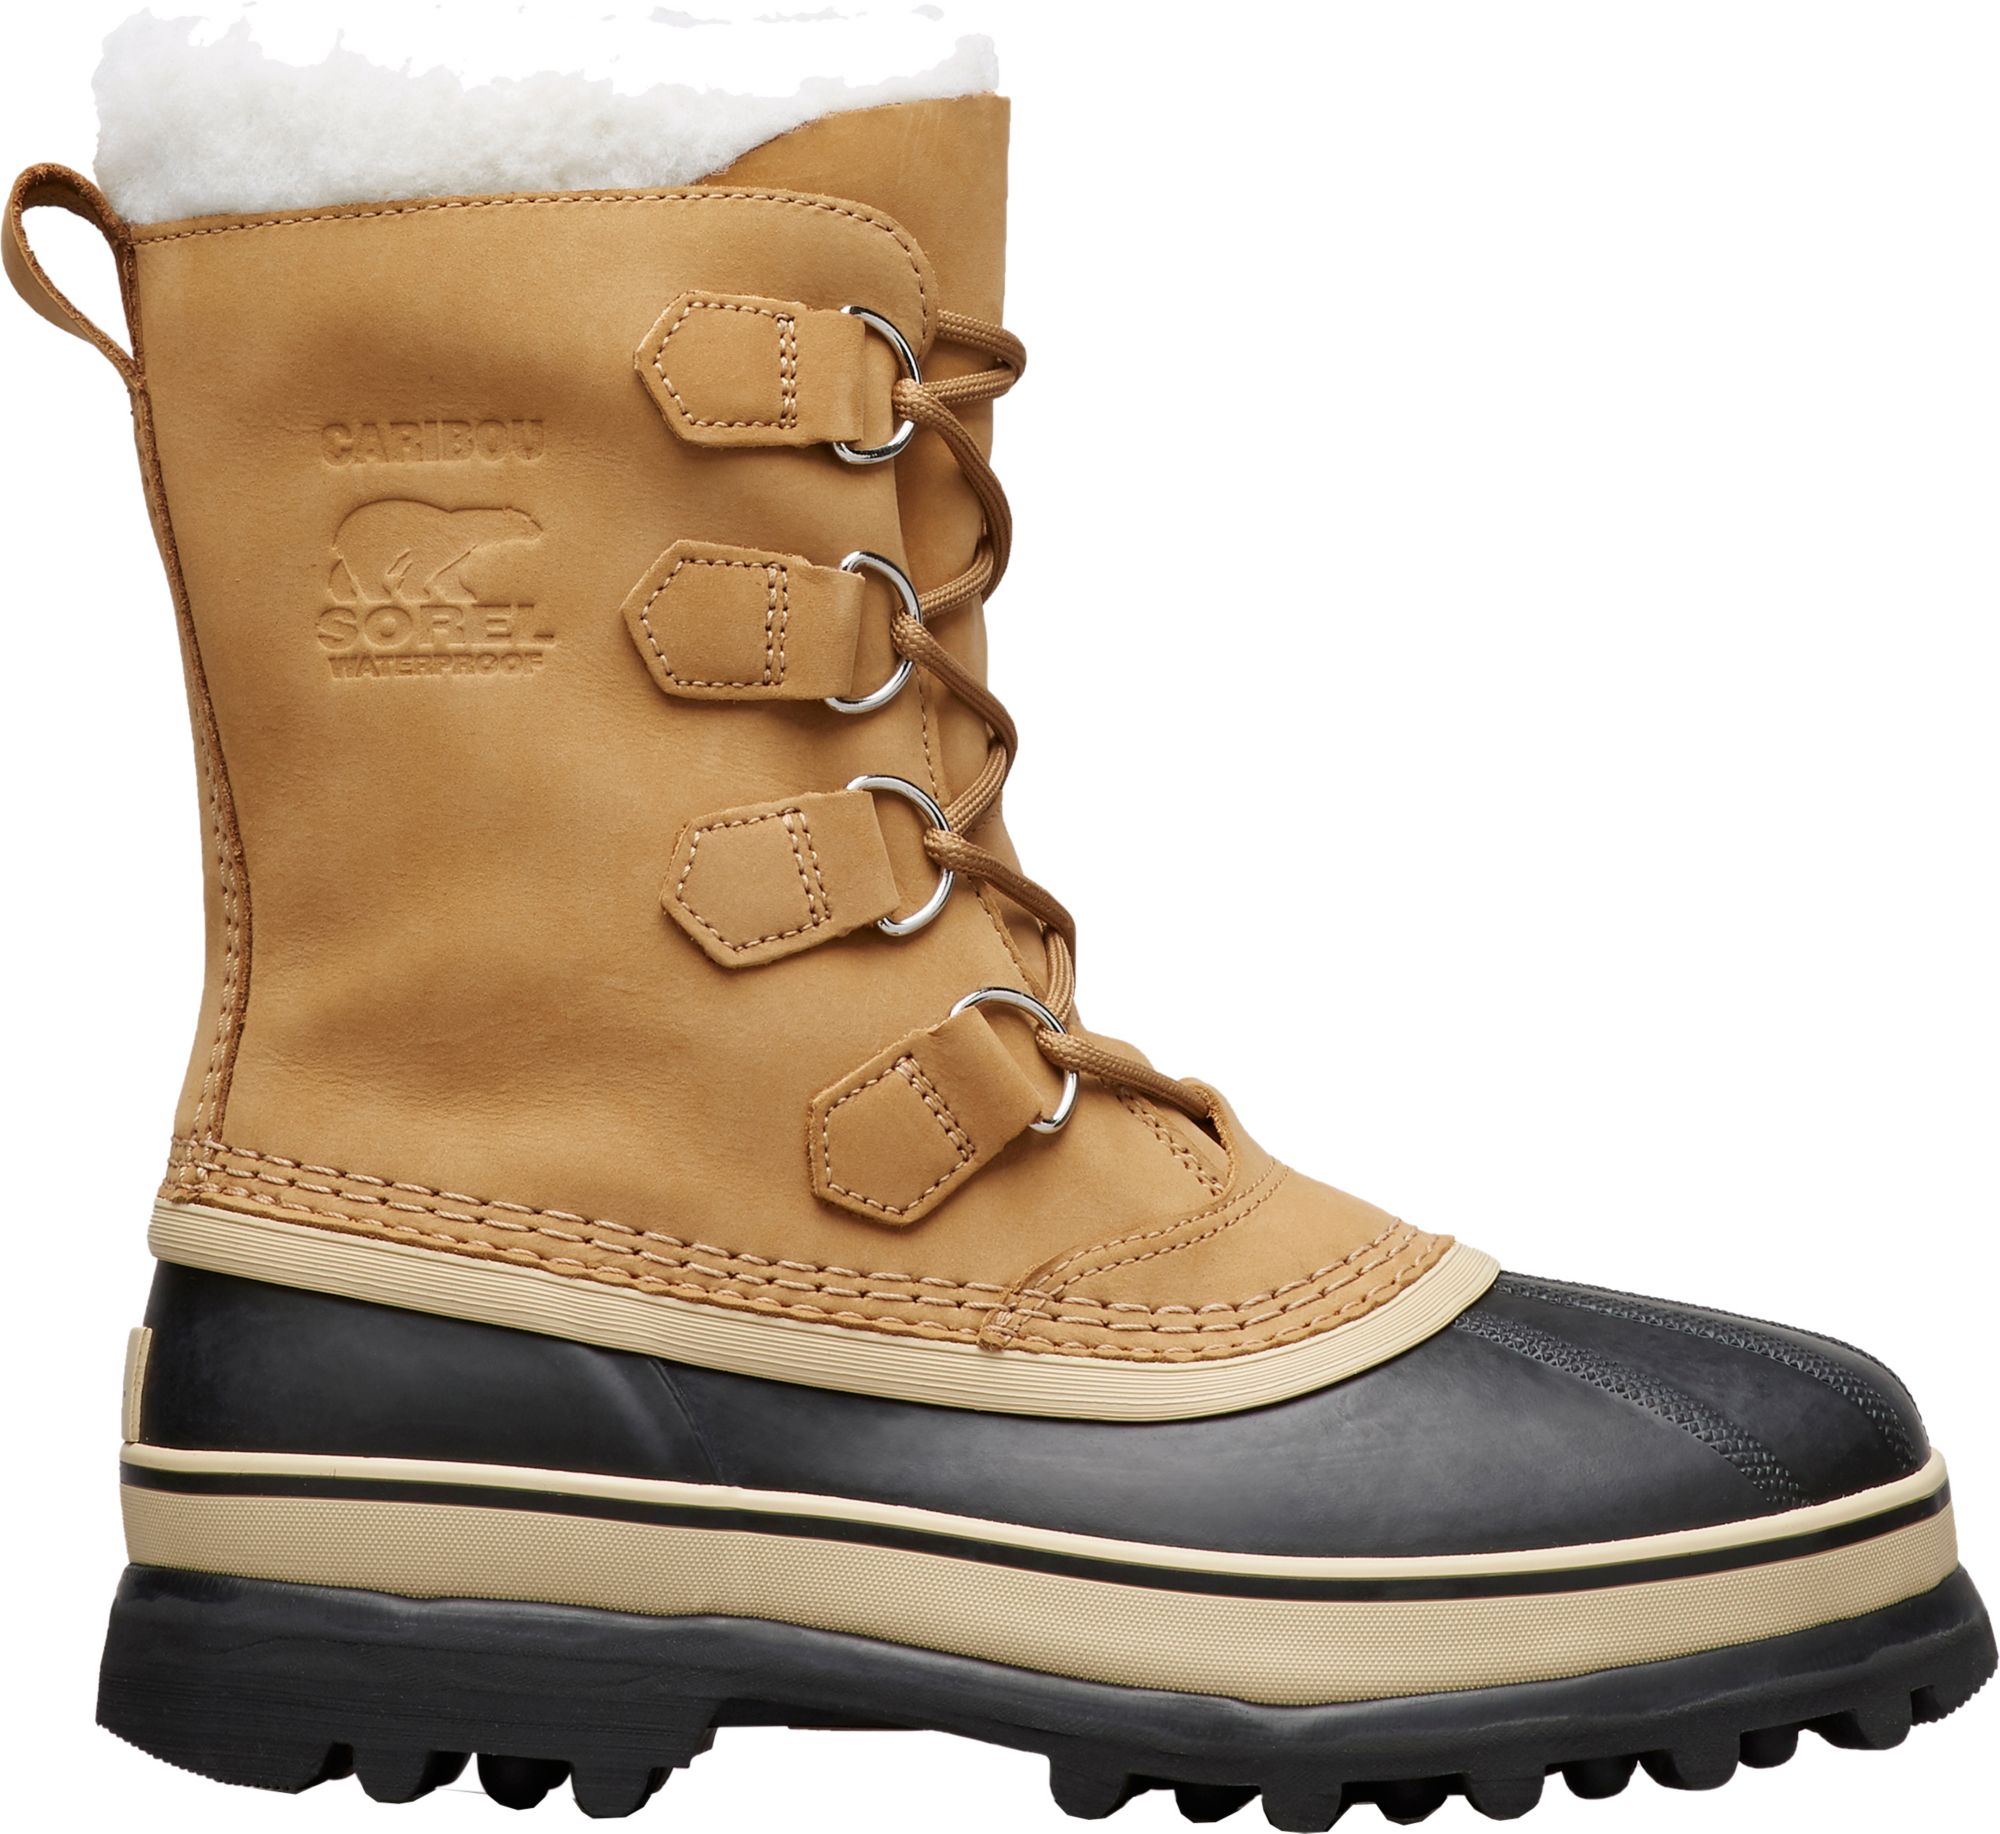 waterproof insulated boots women's